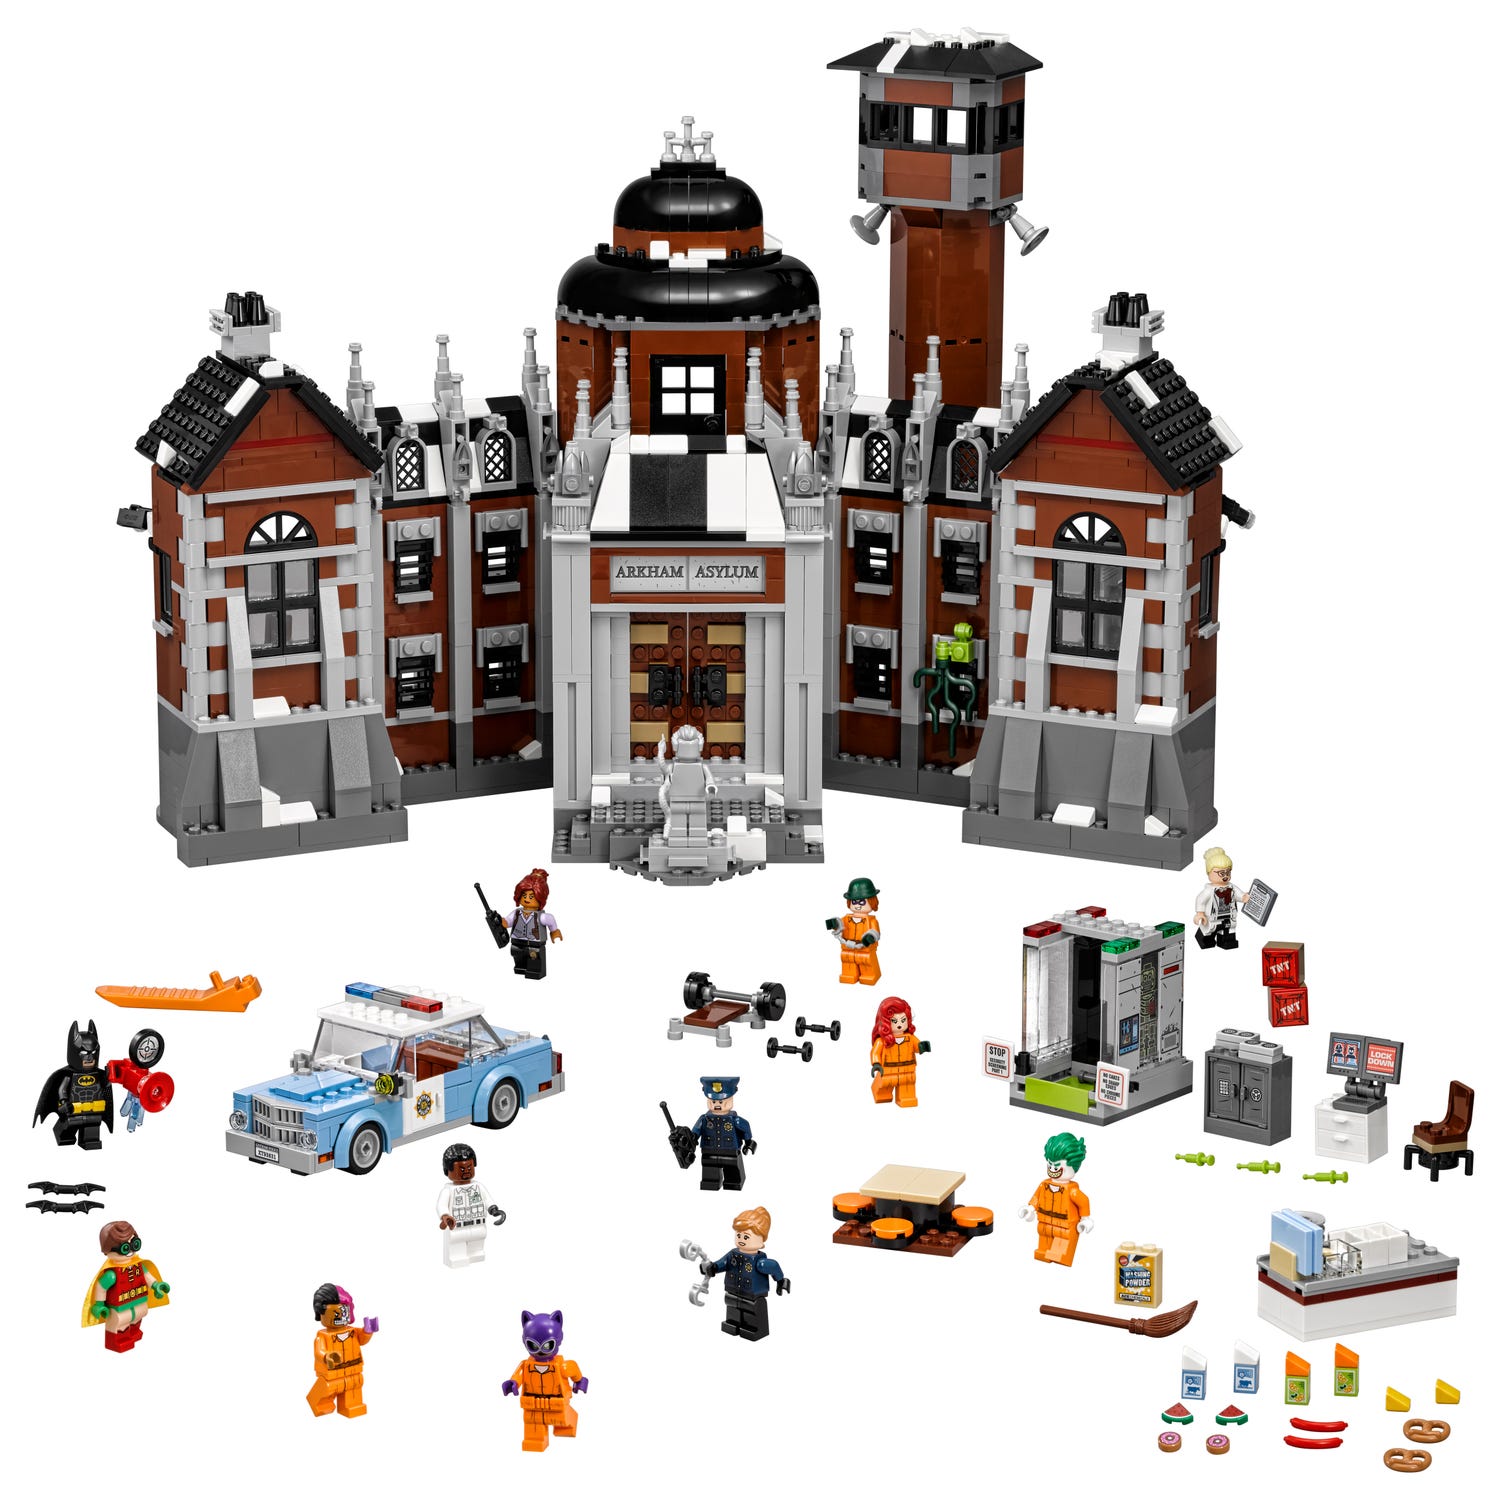 LEGO MINIFIGURE FROM BATMAN SETS - ALL NEW - INCLUDES ROBIN, CATWOMAN,  JOKER